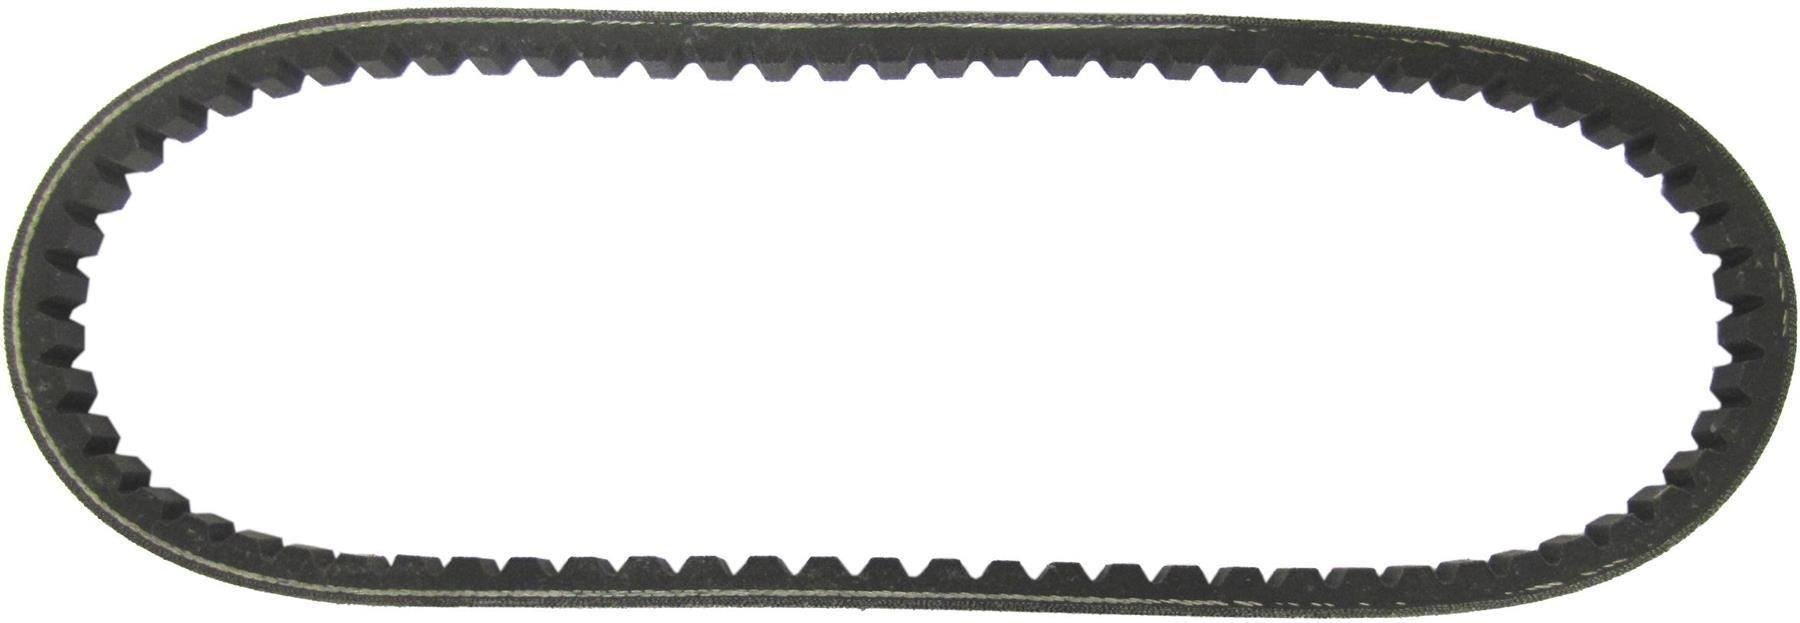 Vespa S 50 2007-1968 Drive Belt